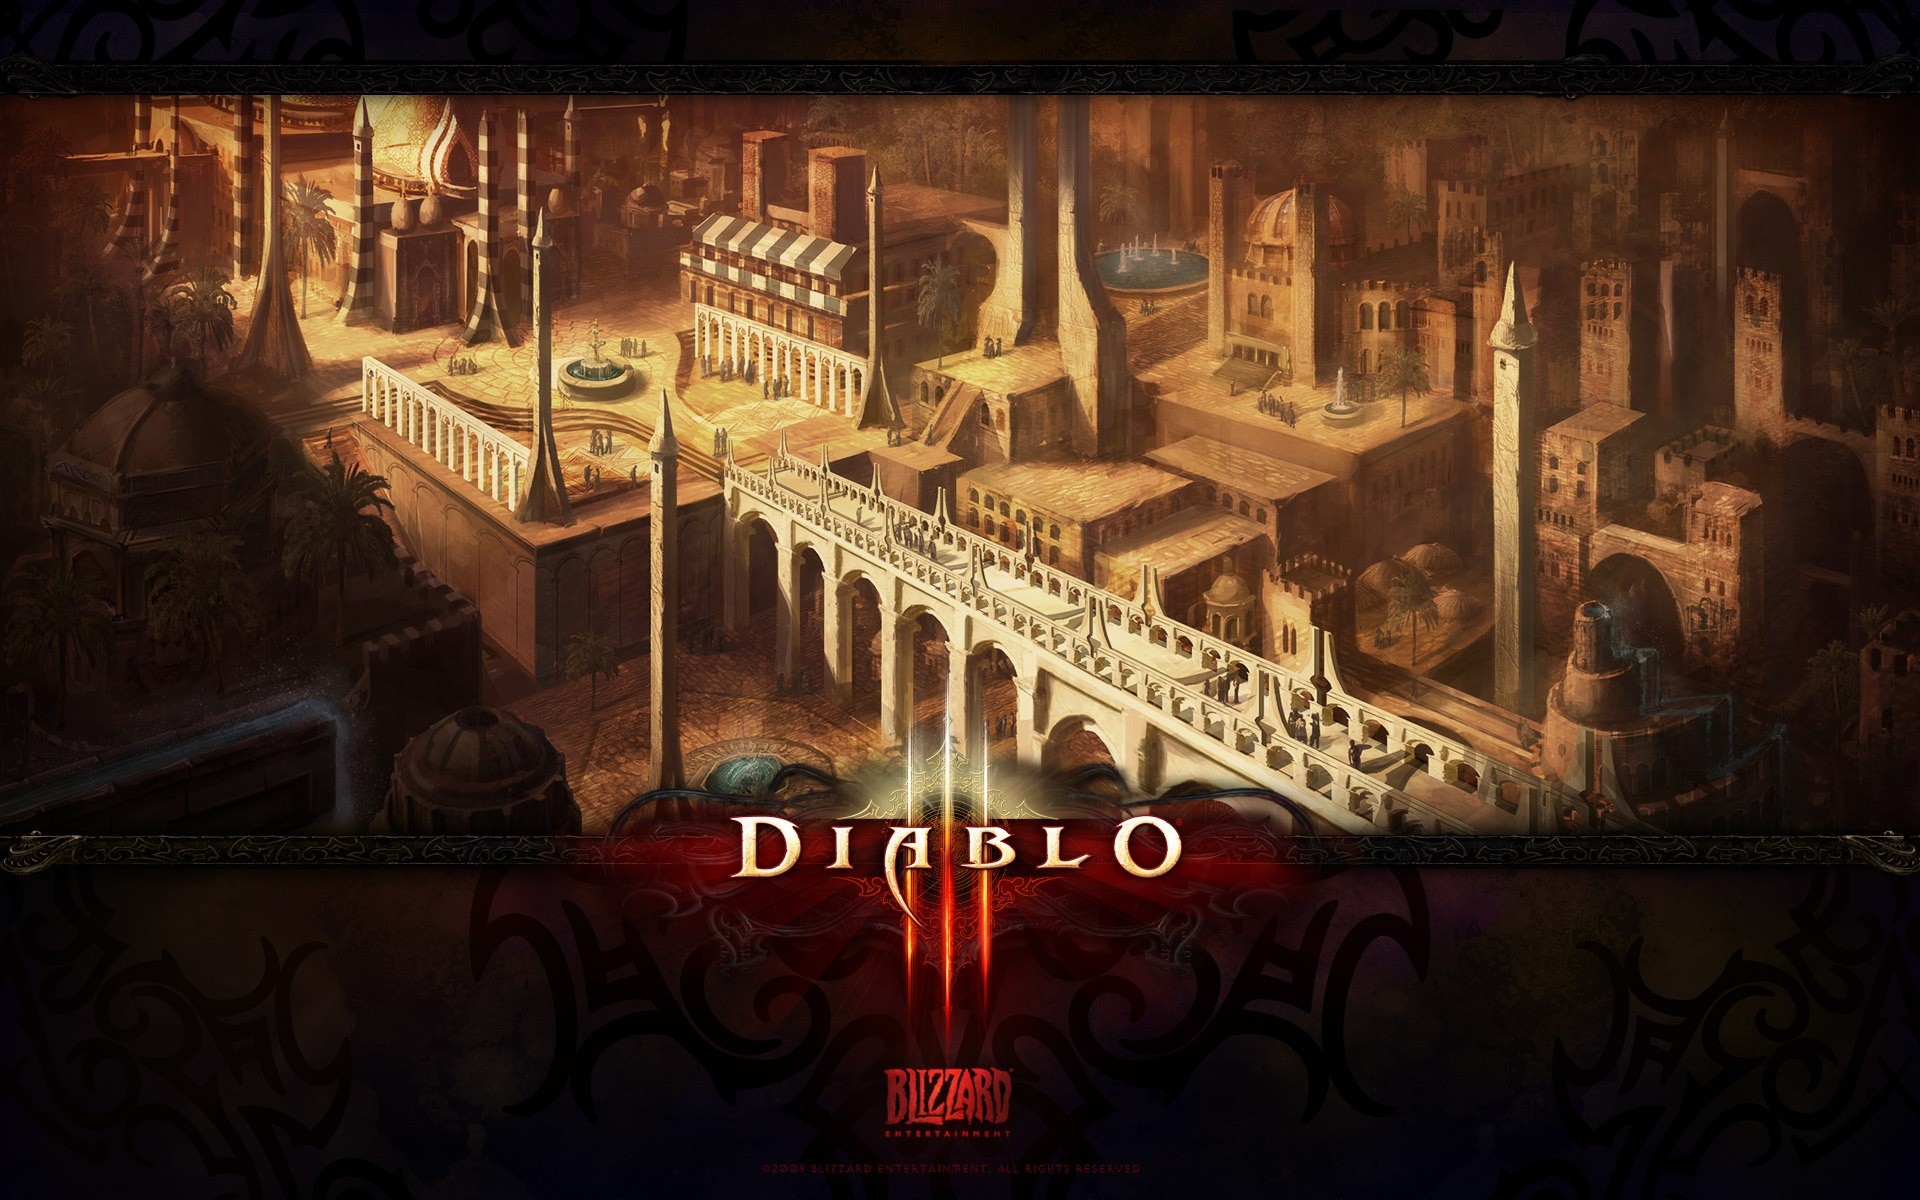 1920x1200 Image: Diablo 3 Concept Art wallpapers and stock photos. Â«